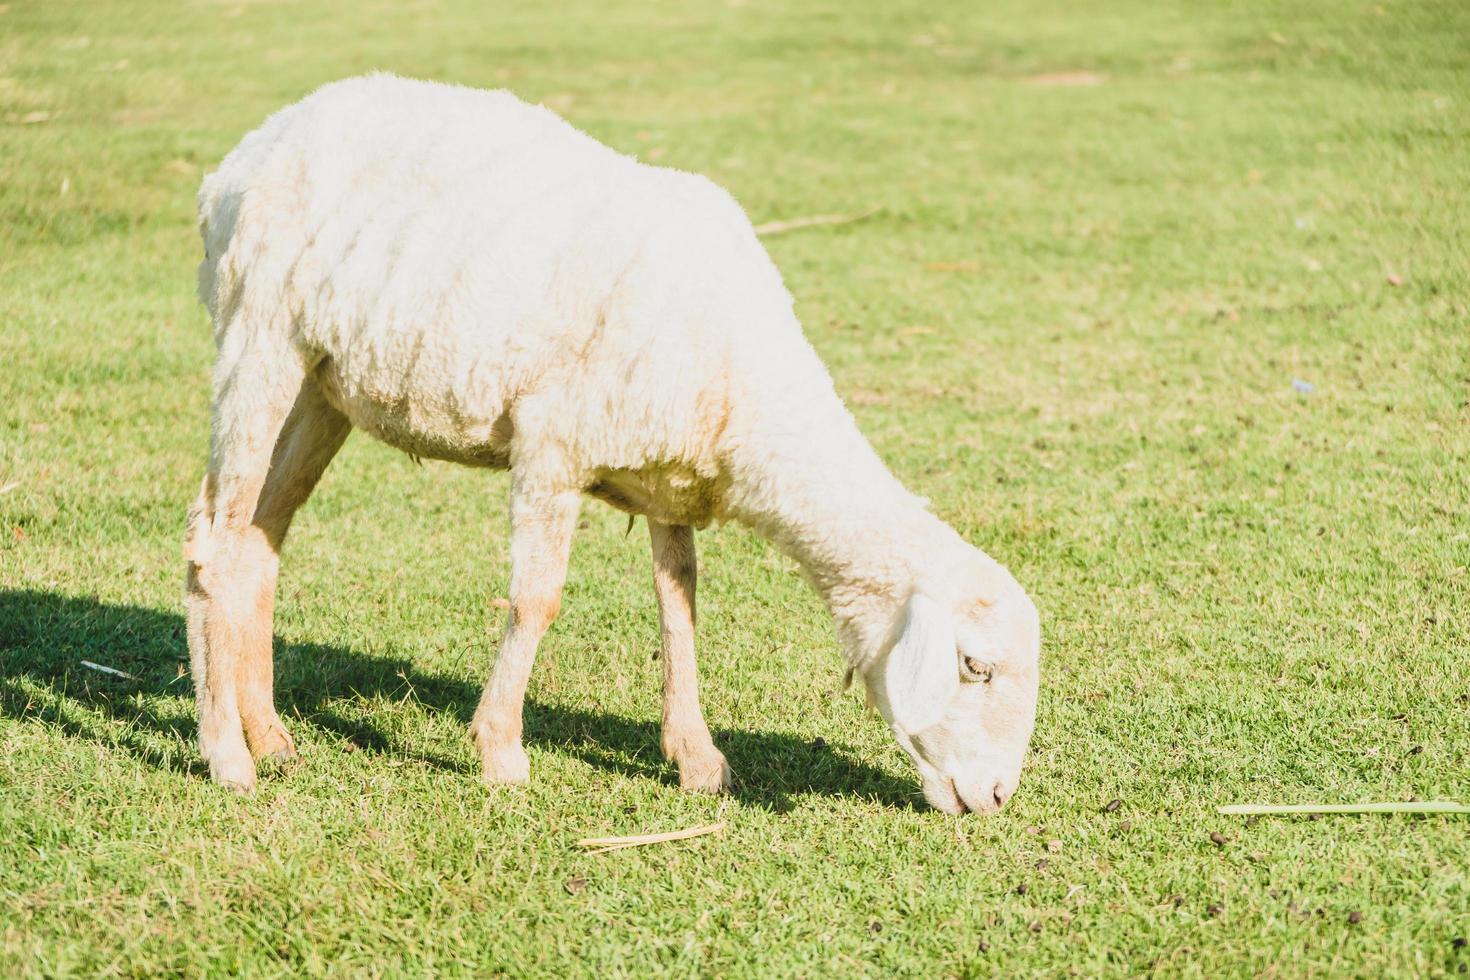 Sheep on green grass photo